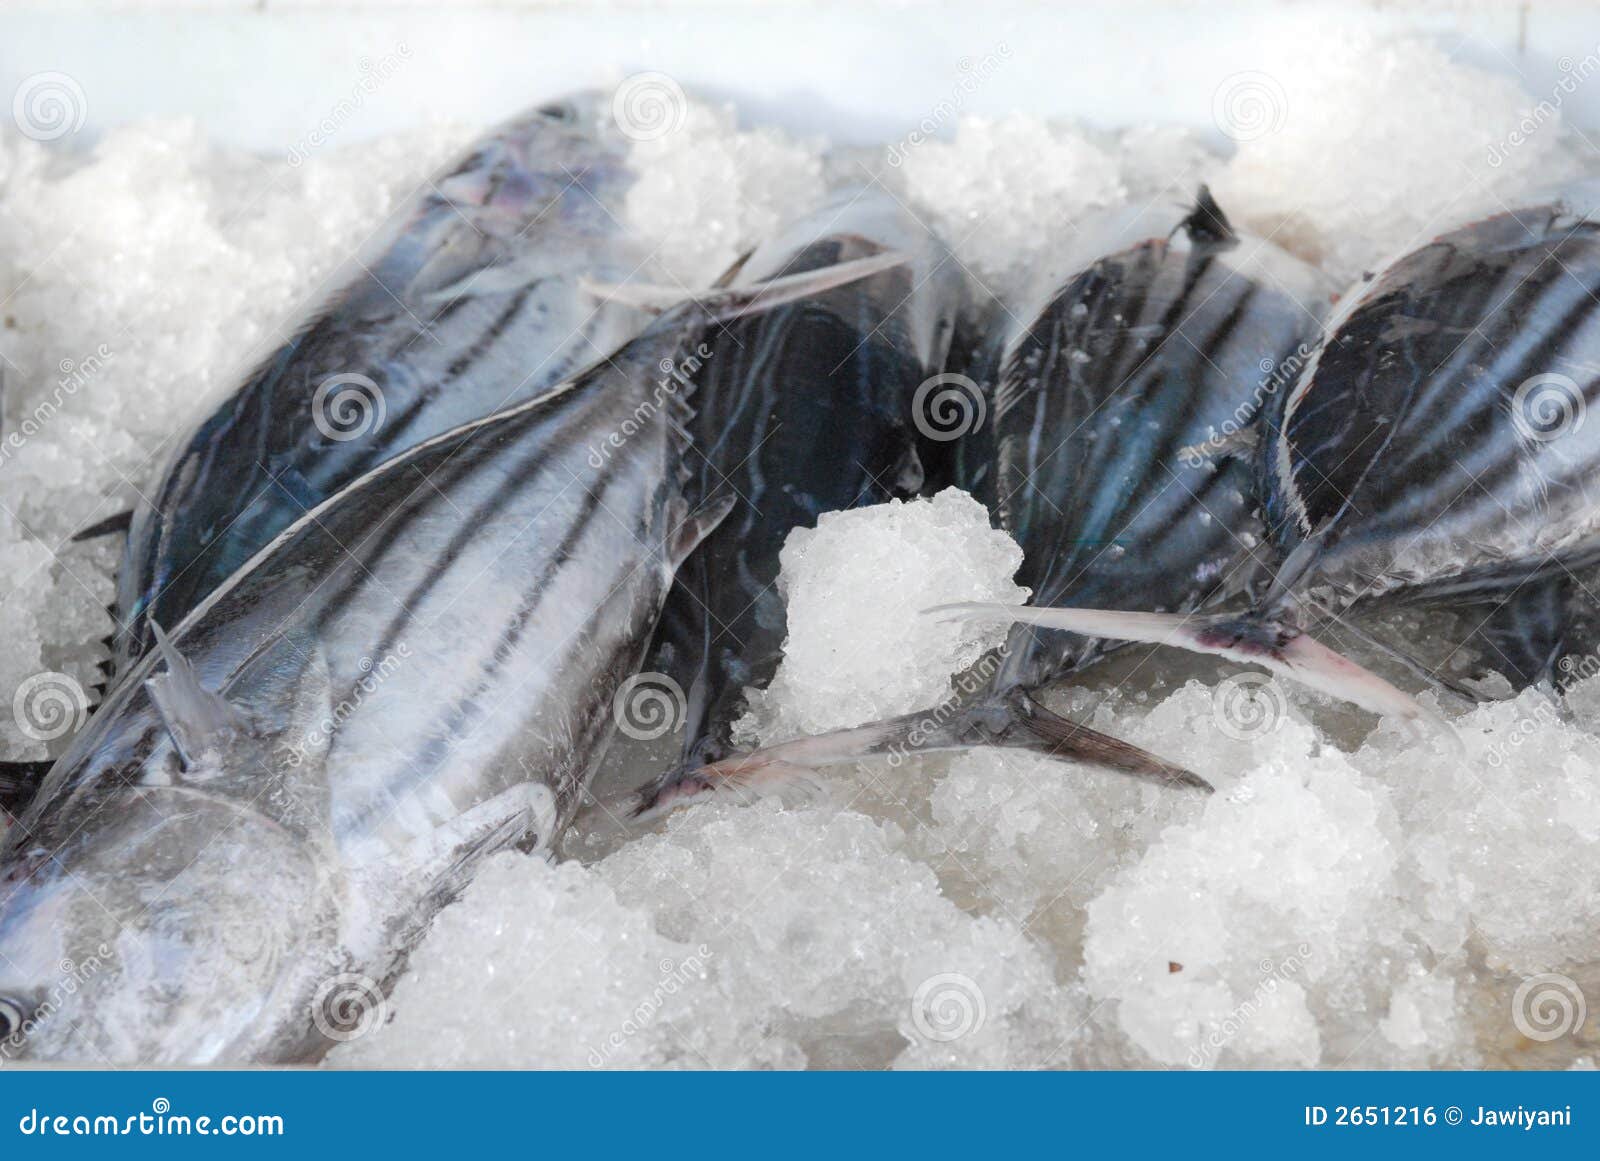 1,095 Maldives Tuna Fishing Stock Photos - Free & Royalty-Free Stock Photos  from Dreamstime